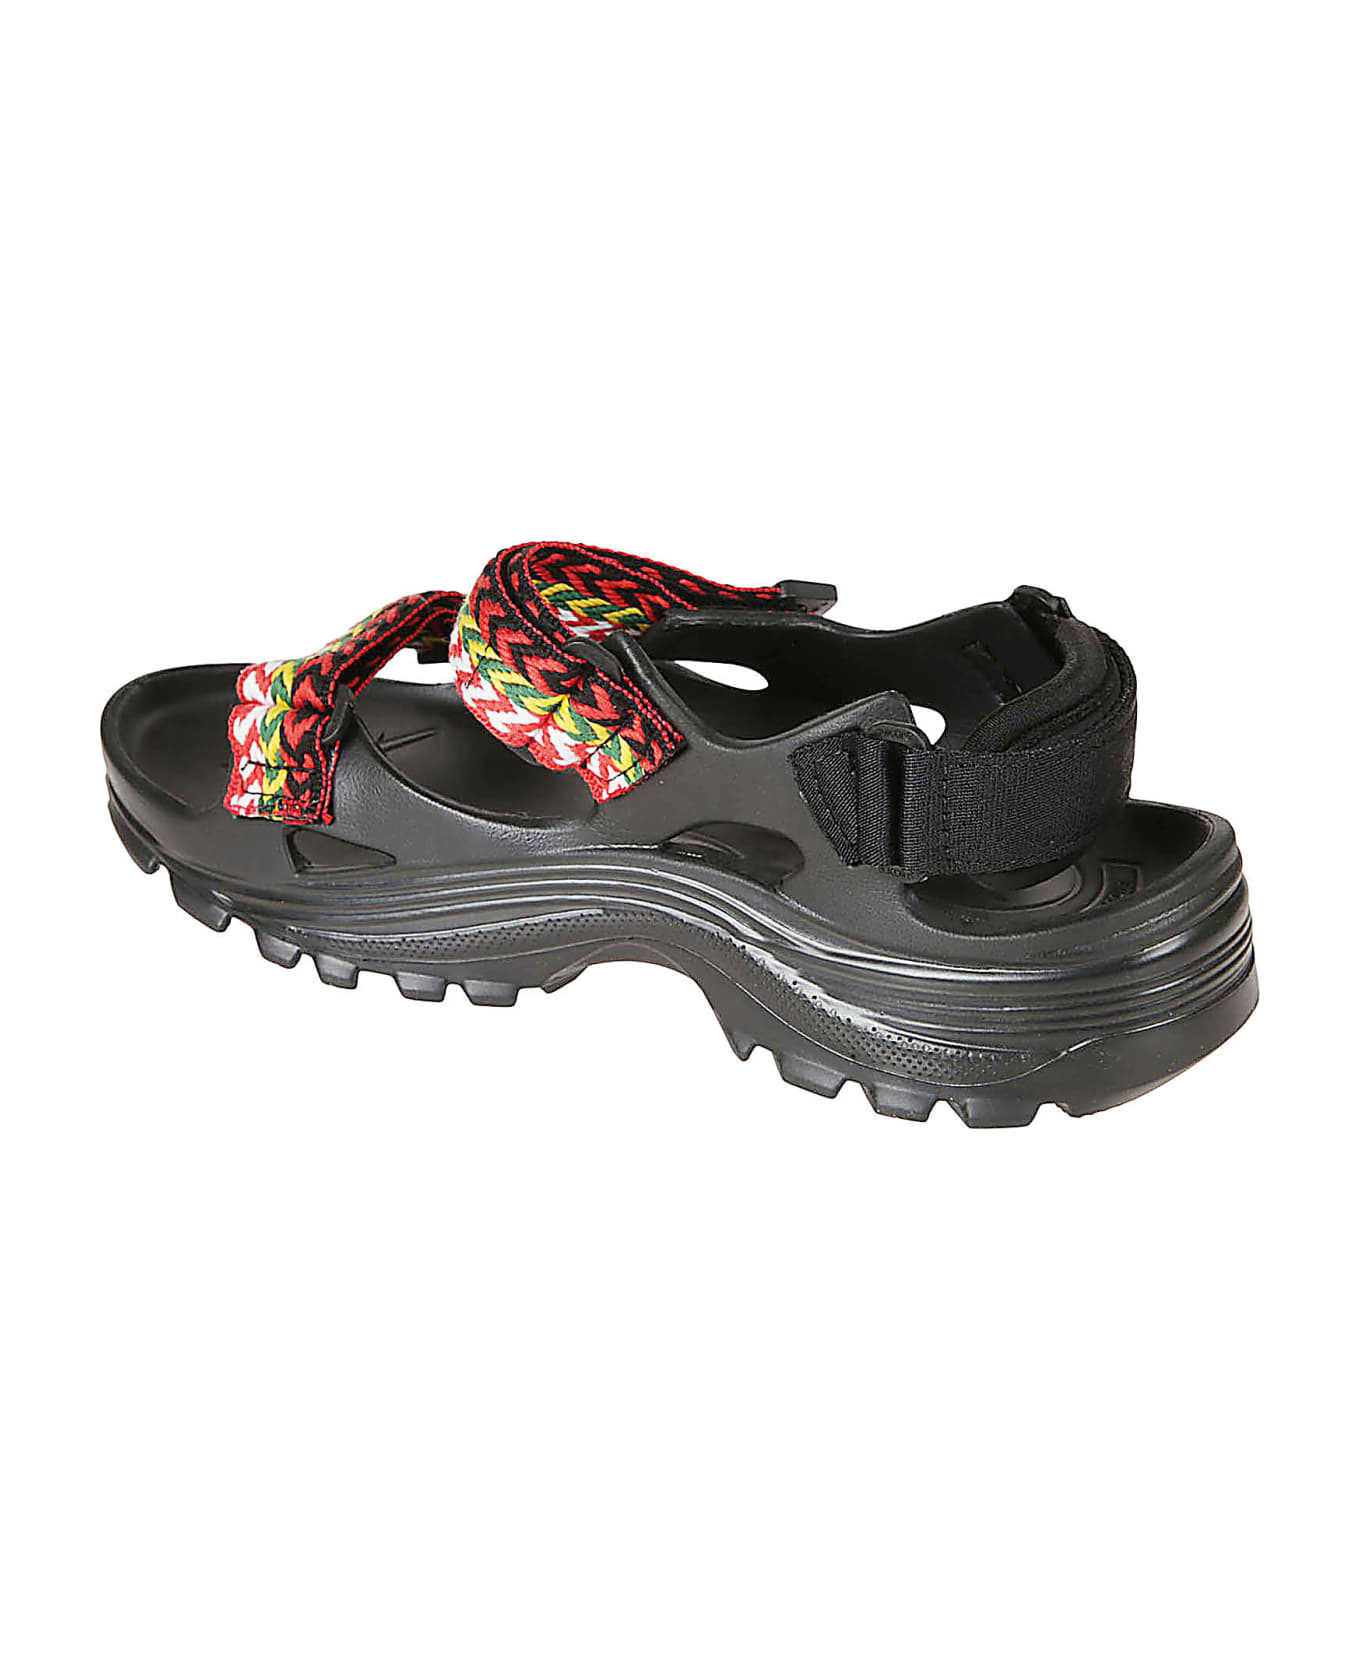 Lanvin Wake Curb Sandals - Black